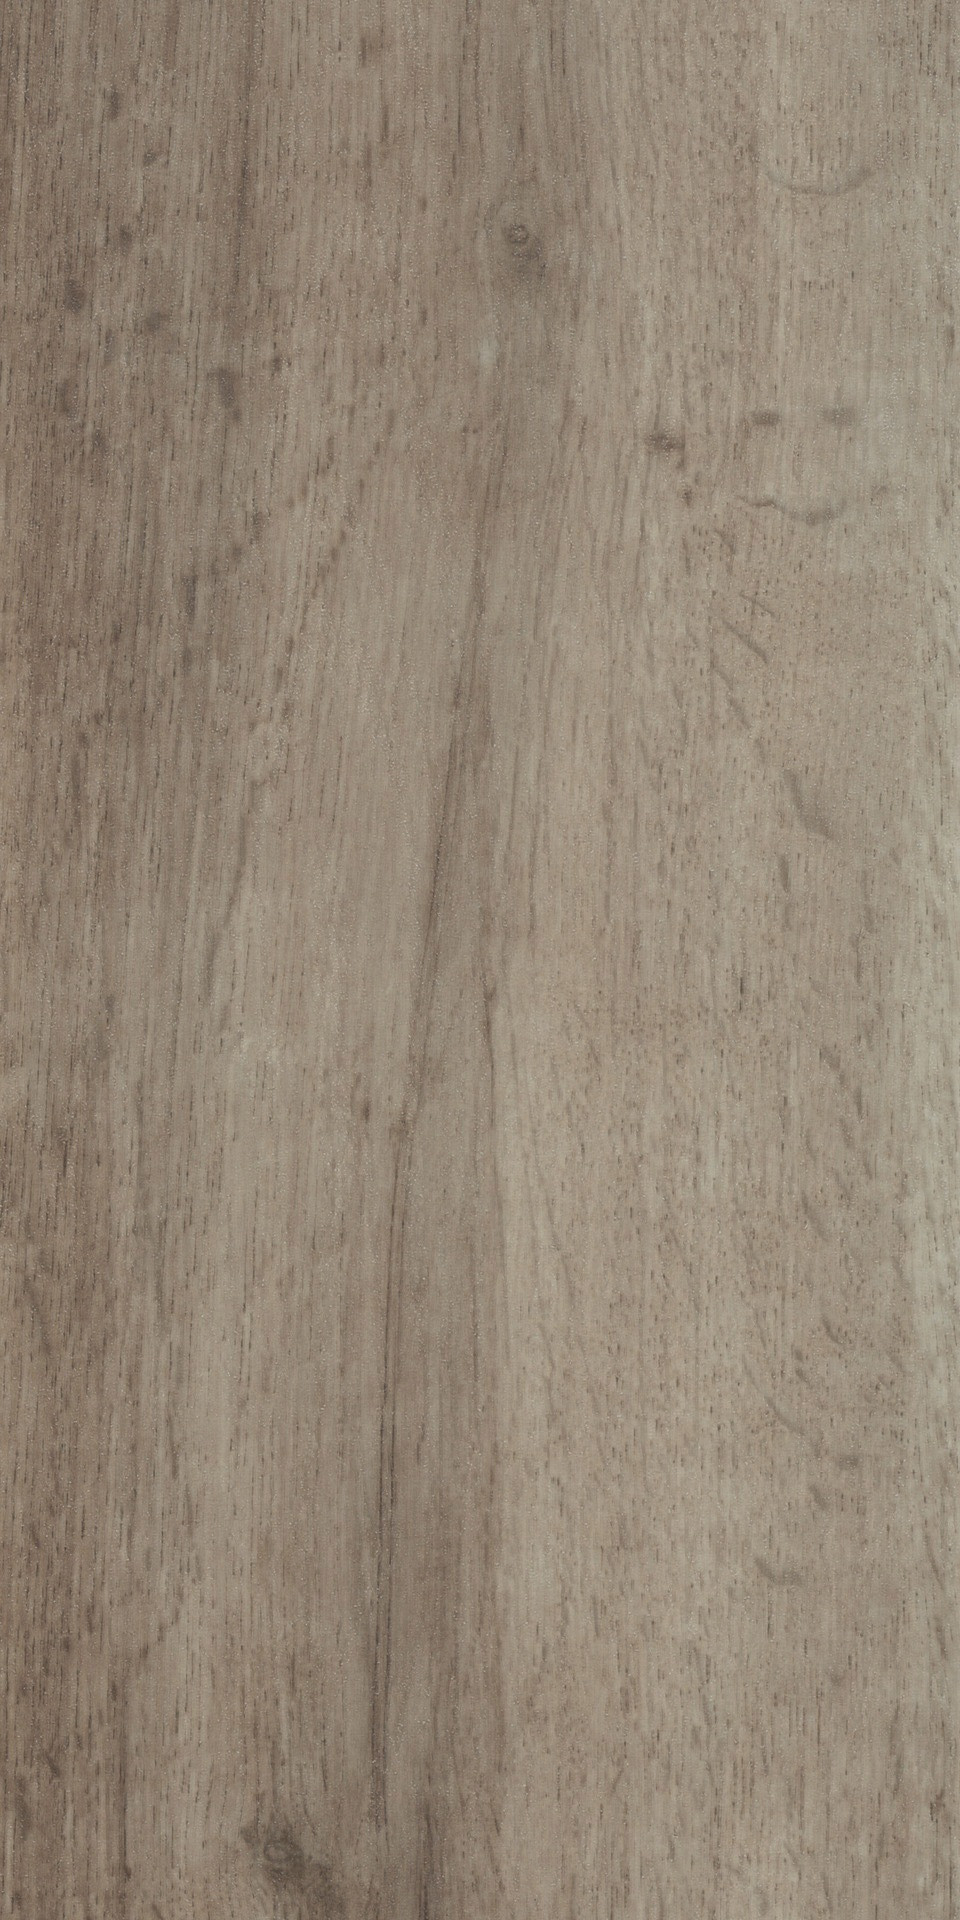 dark oak hardwood floors of 26 unique grey hardwood floors photos flooring design ideas pertaining to grey hardwood floors best of forbo allura flex 0 55 grey autumn oak selbstliegender vinylboden images